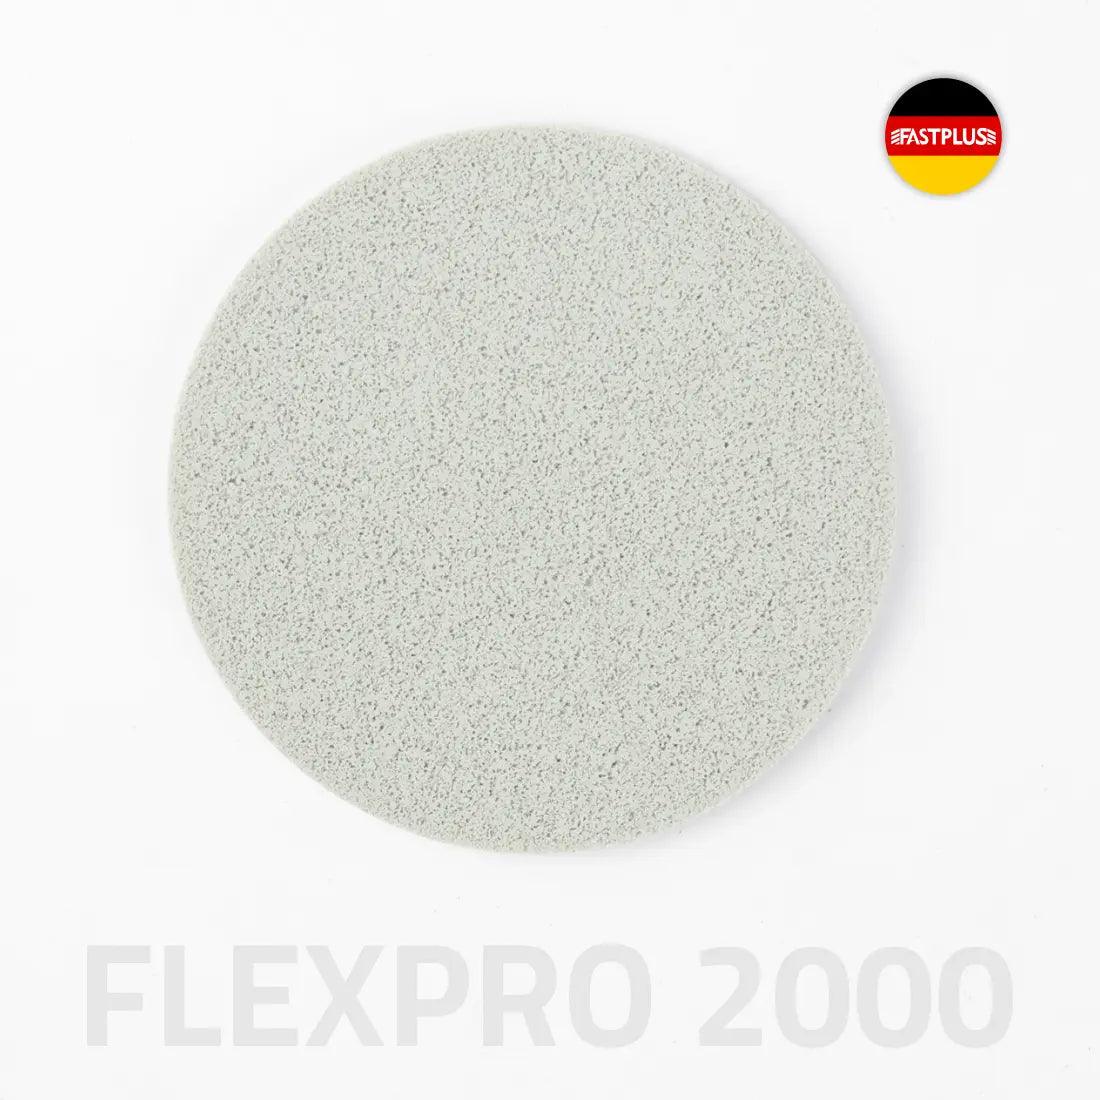 75mm FLEXPRO fine finishing foam discs trizact P2000 Schaumstoff feinschleifscheiben K2000 Disques de finition fine